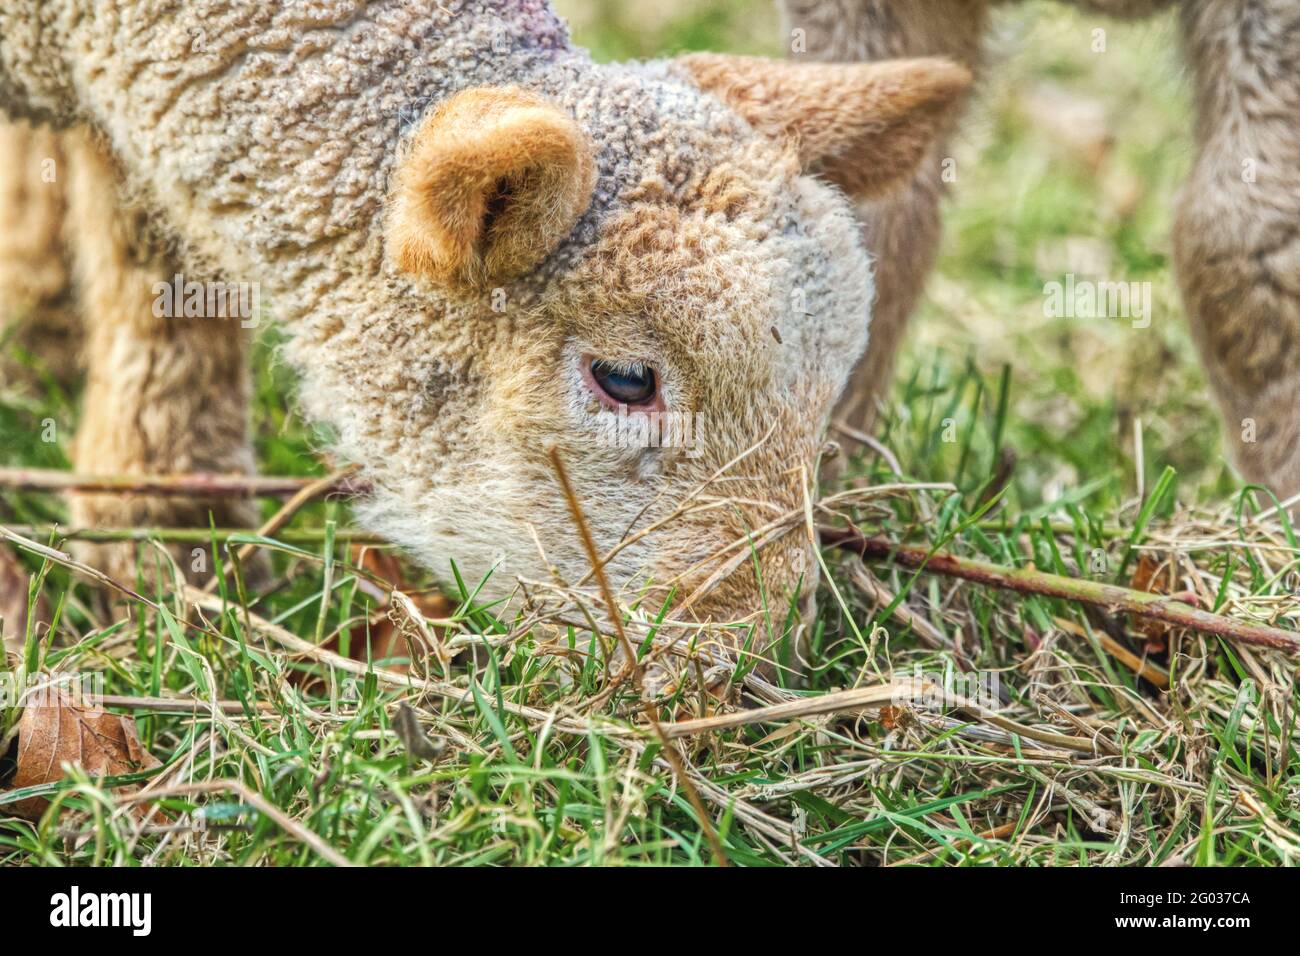 Primer plano retrato del cordero comiendo hierba. Co. Wexford. Irlanda. Foto de stock